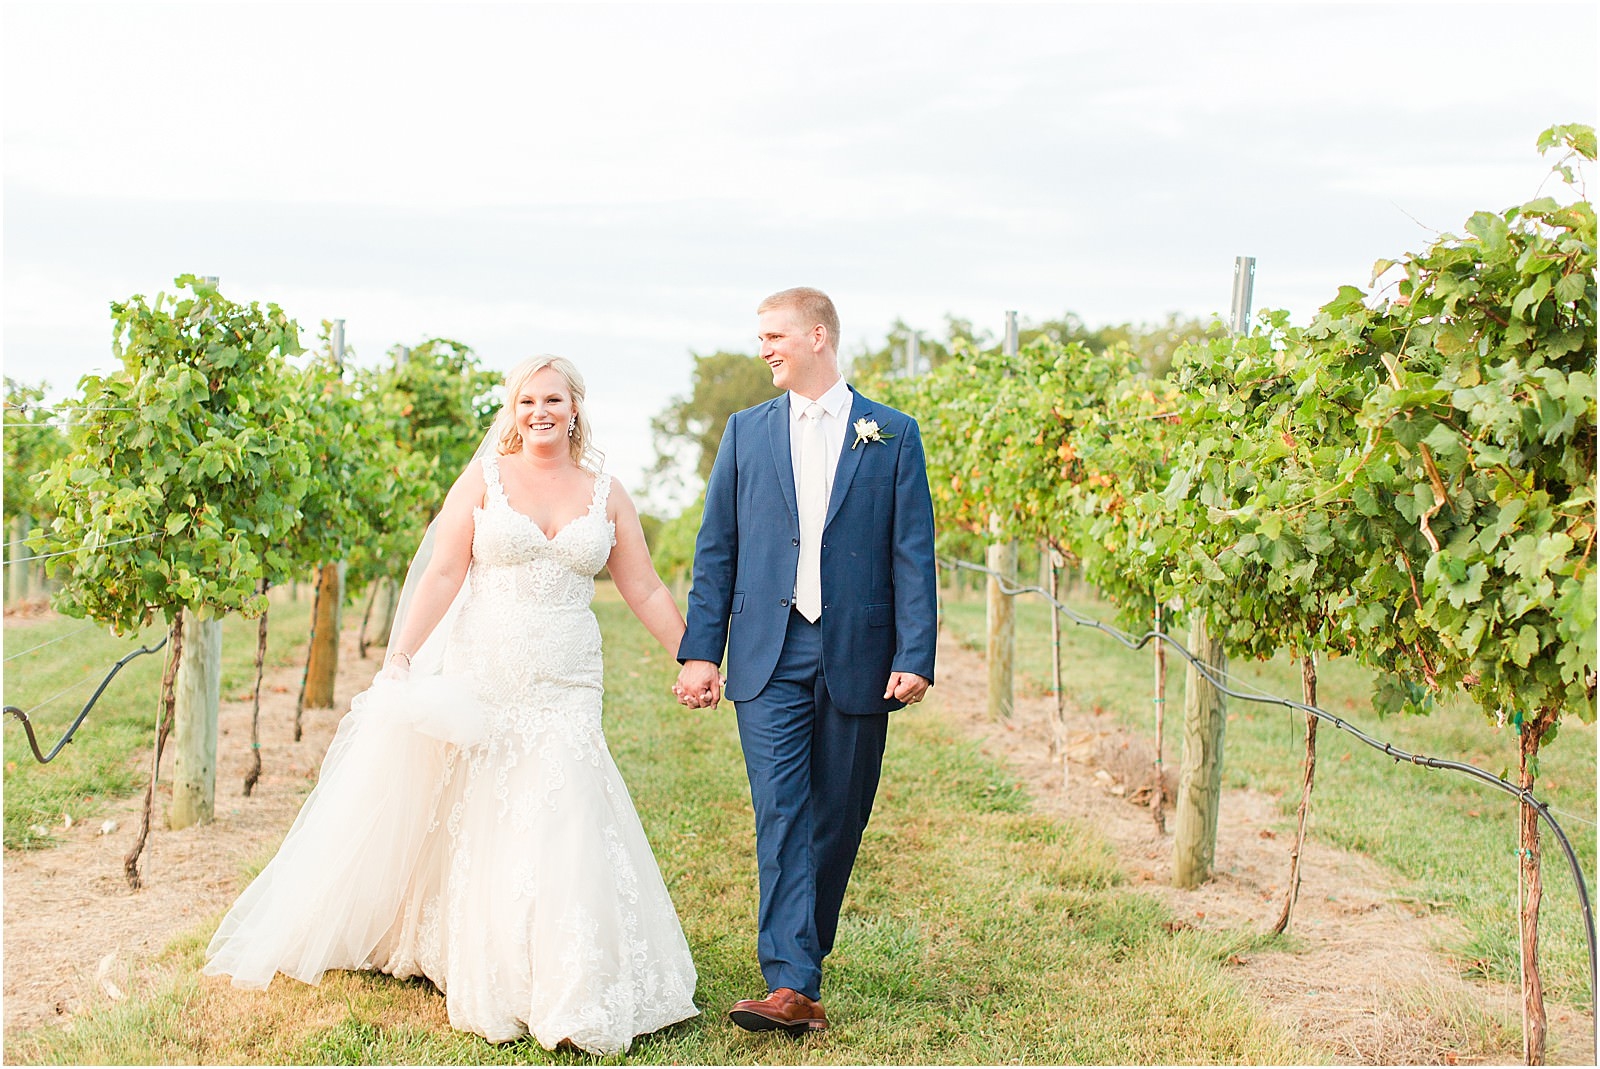 Kelsey and Caleb | Walkers Bluff Winery Wedding | Bret and Brandie Photography101.jpg